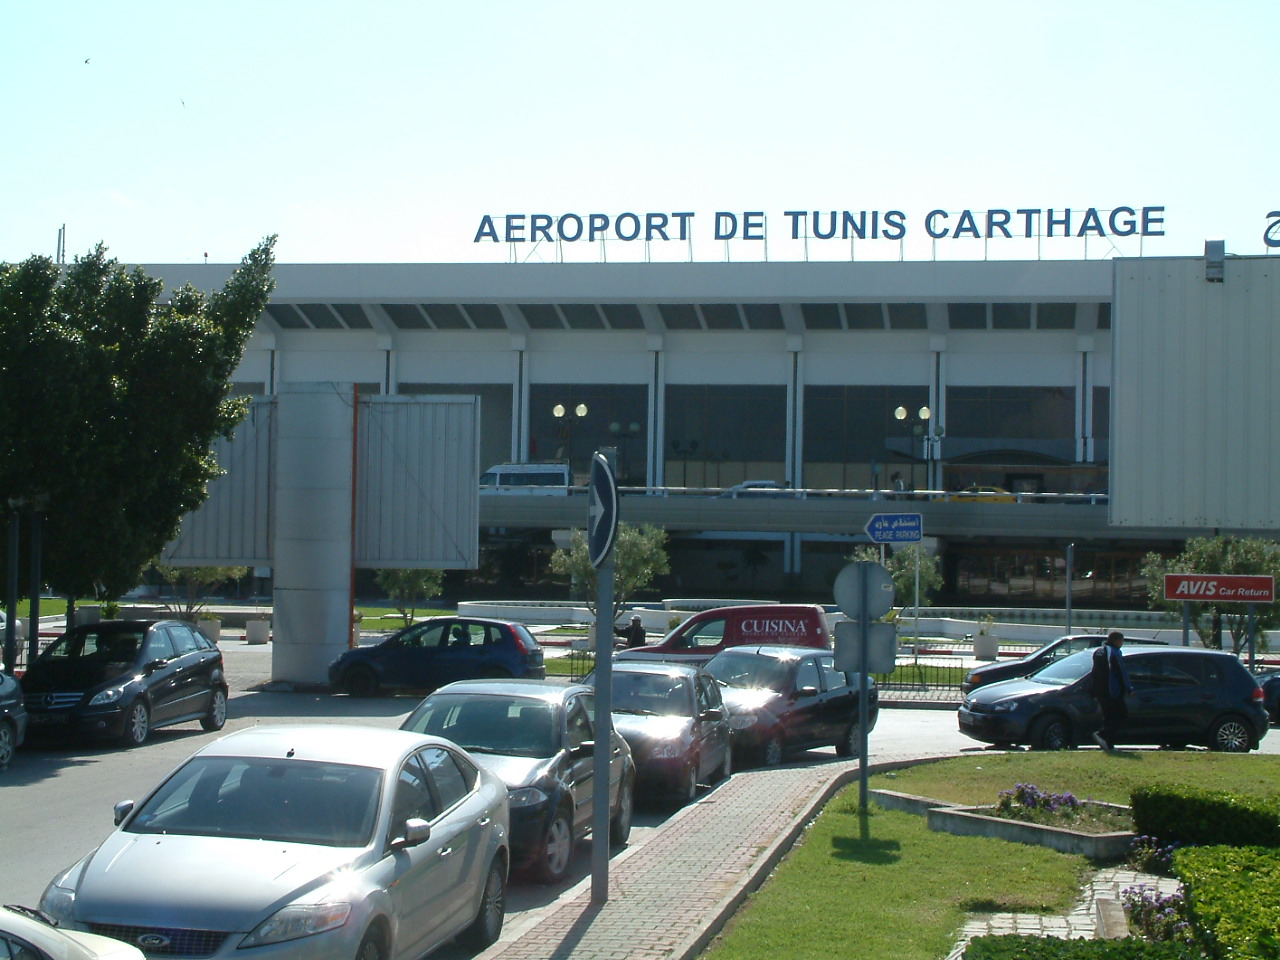 2 mei 2009 Tunis – Amsterdam